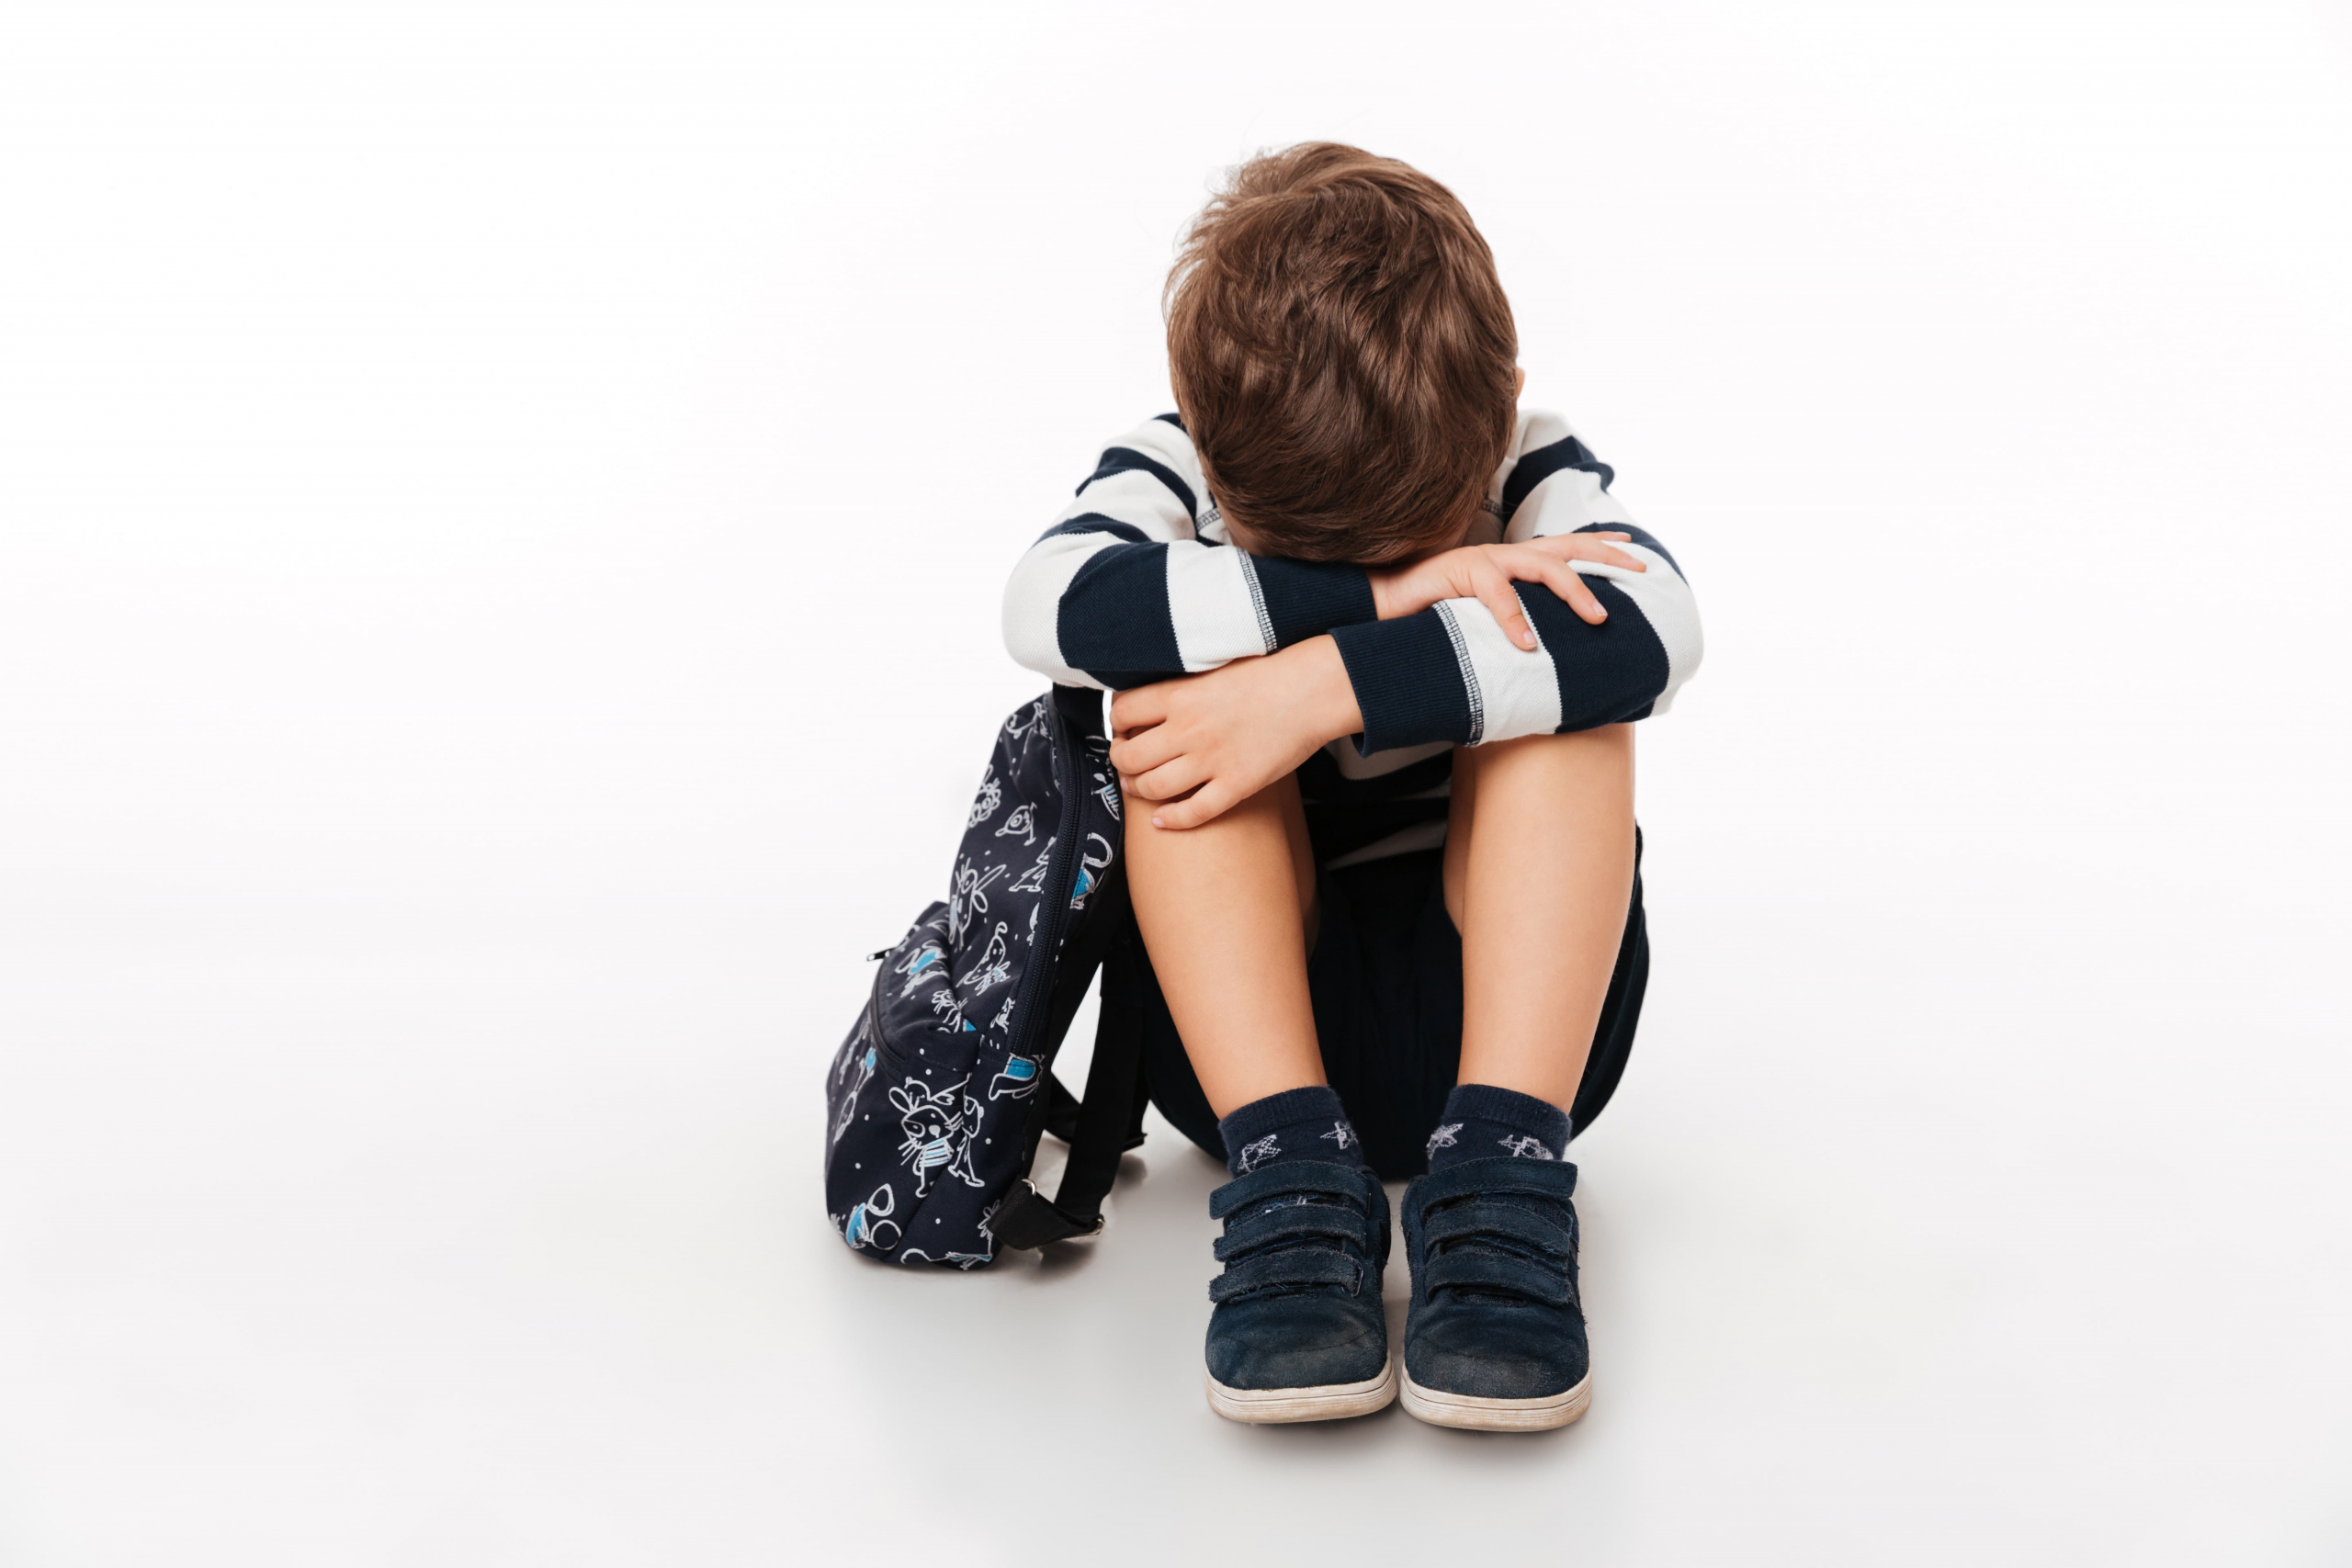 Terapia infantil para casos de bullying